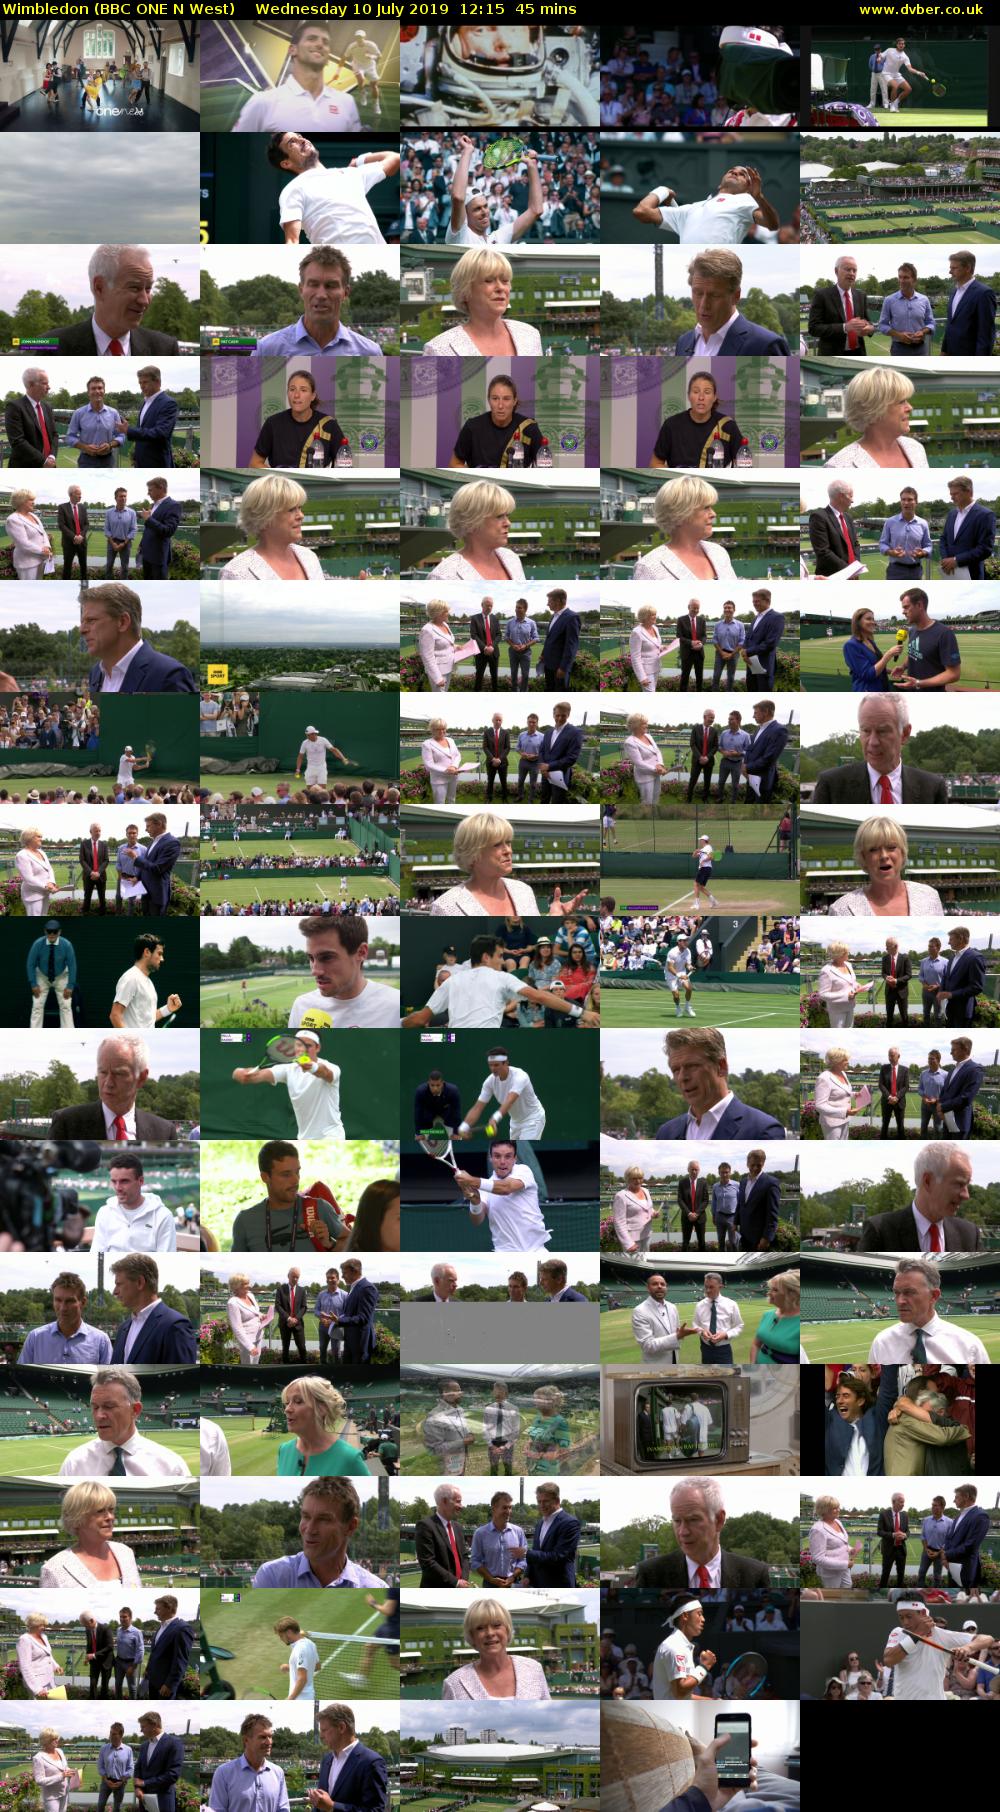 Wimbledon (BBC ONE N West) Wednesday 10 July 2019 12:15 - 13:00